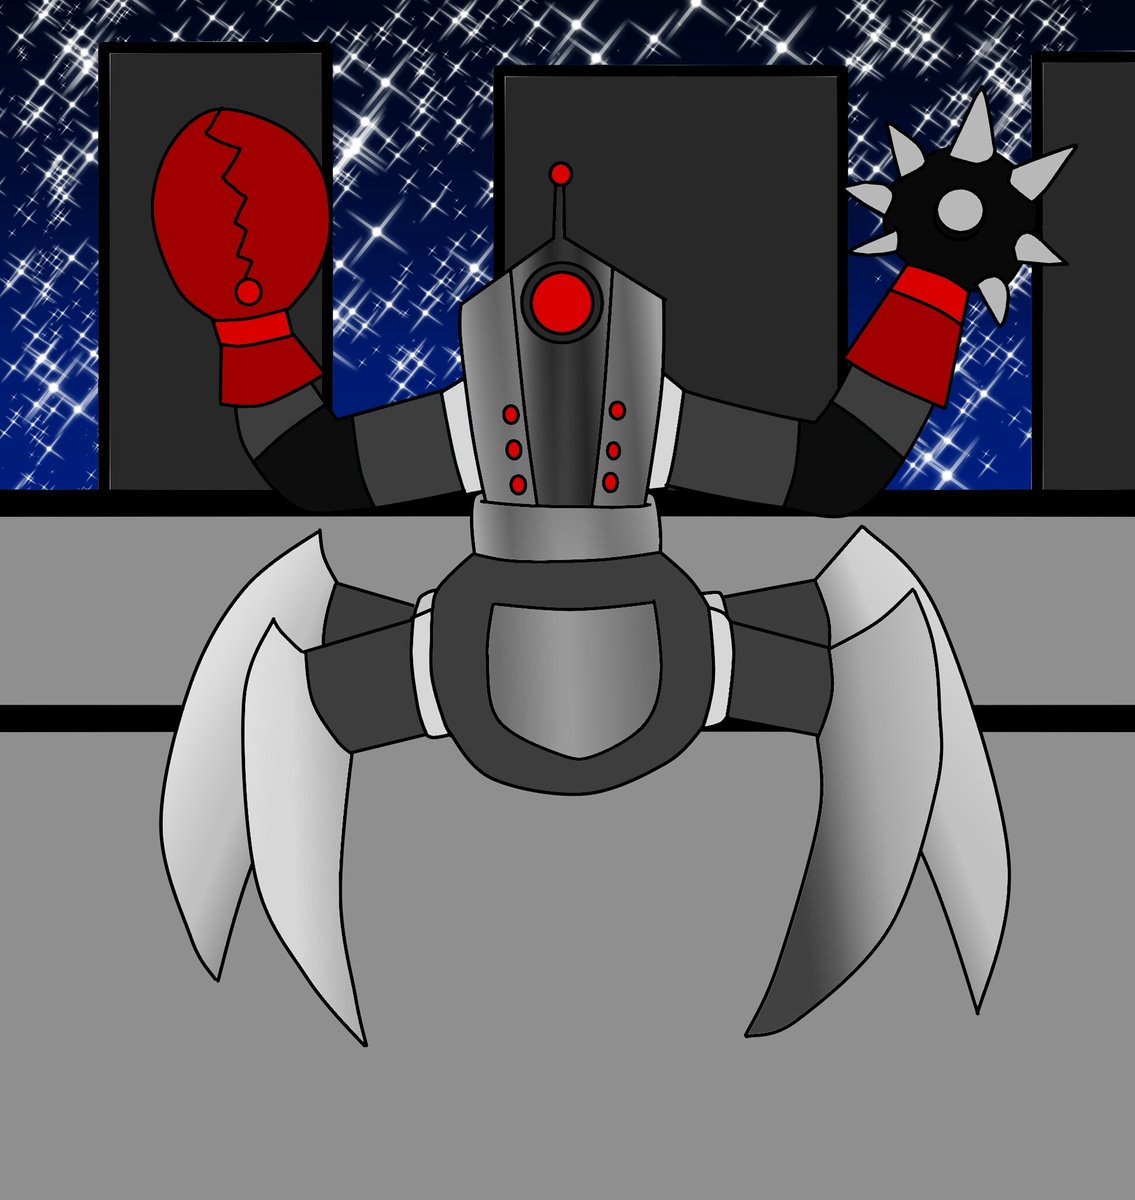 BACM-45 😊 #fighter #warrior #robot #monster #Mecha #kaijuly